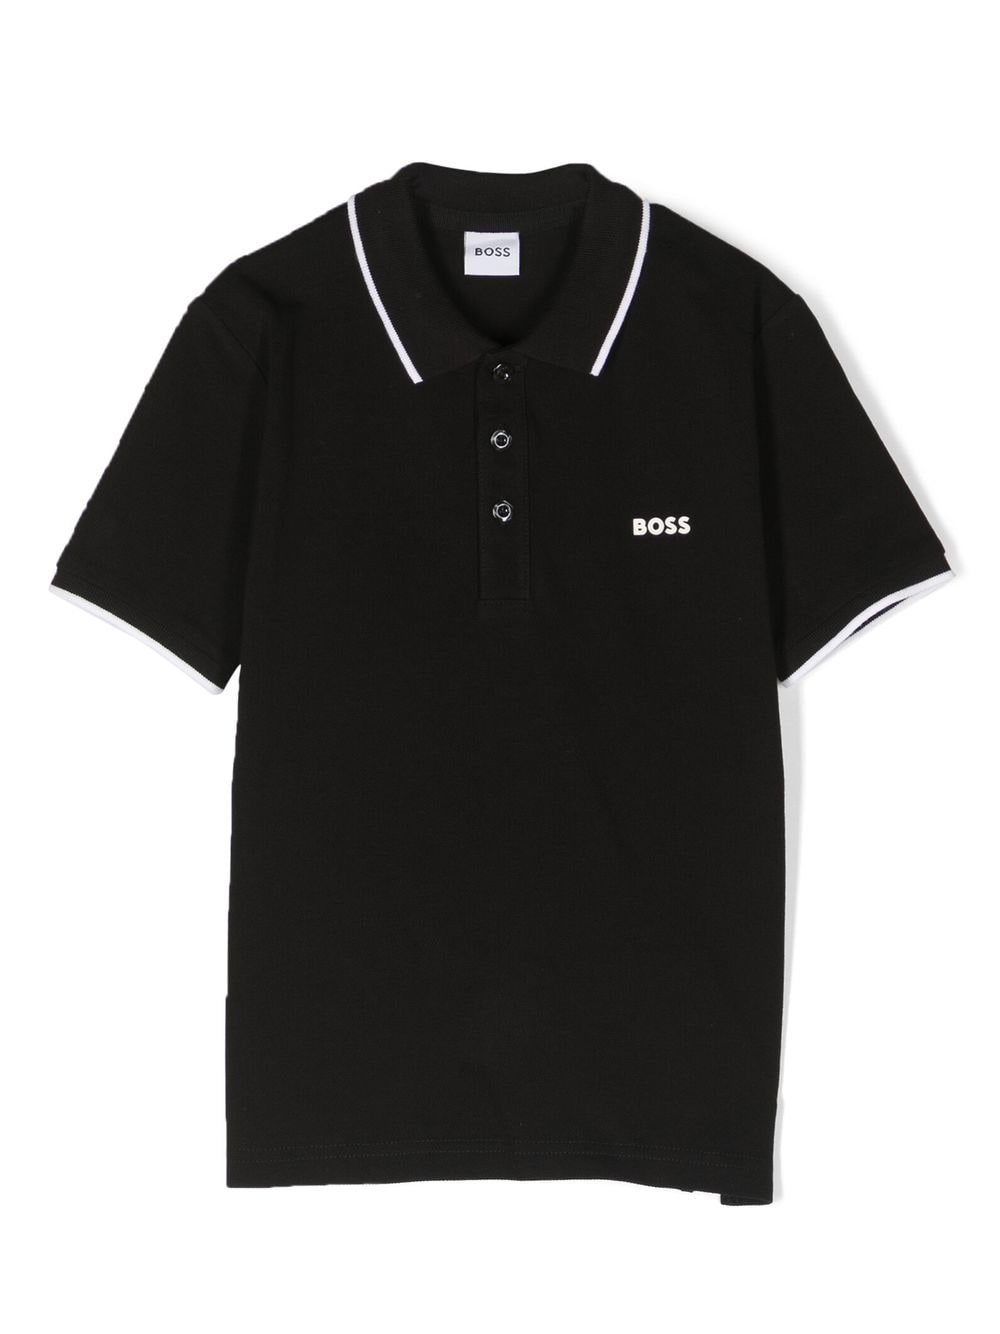 Black polo shirt for boys with logo